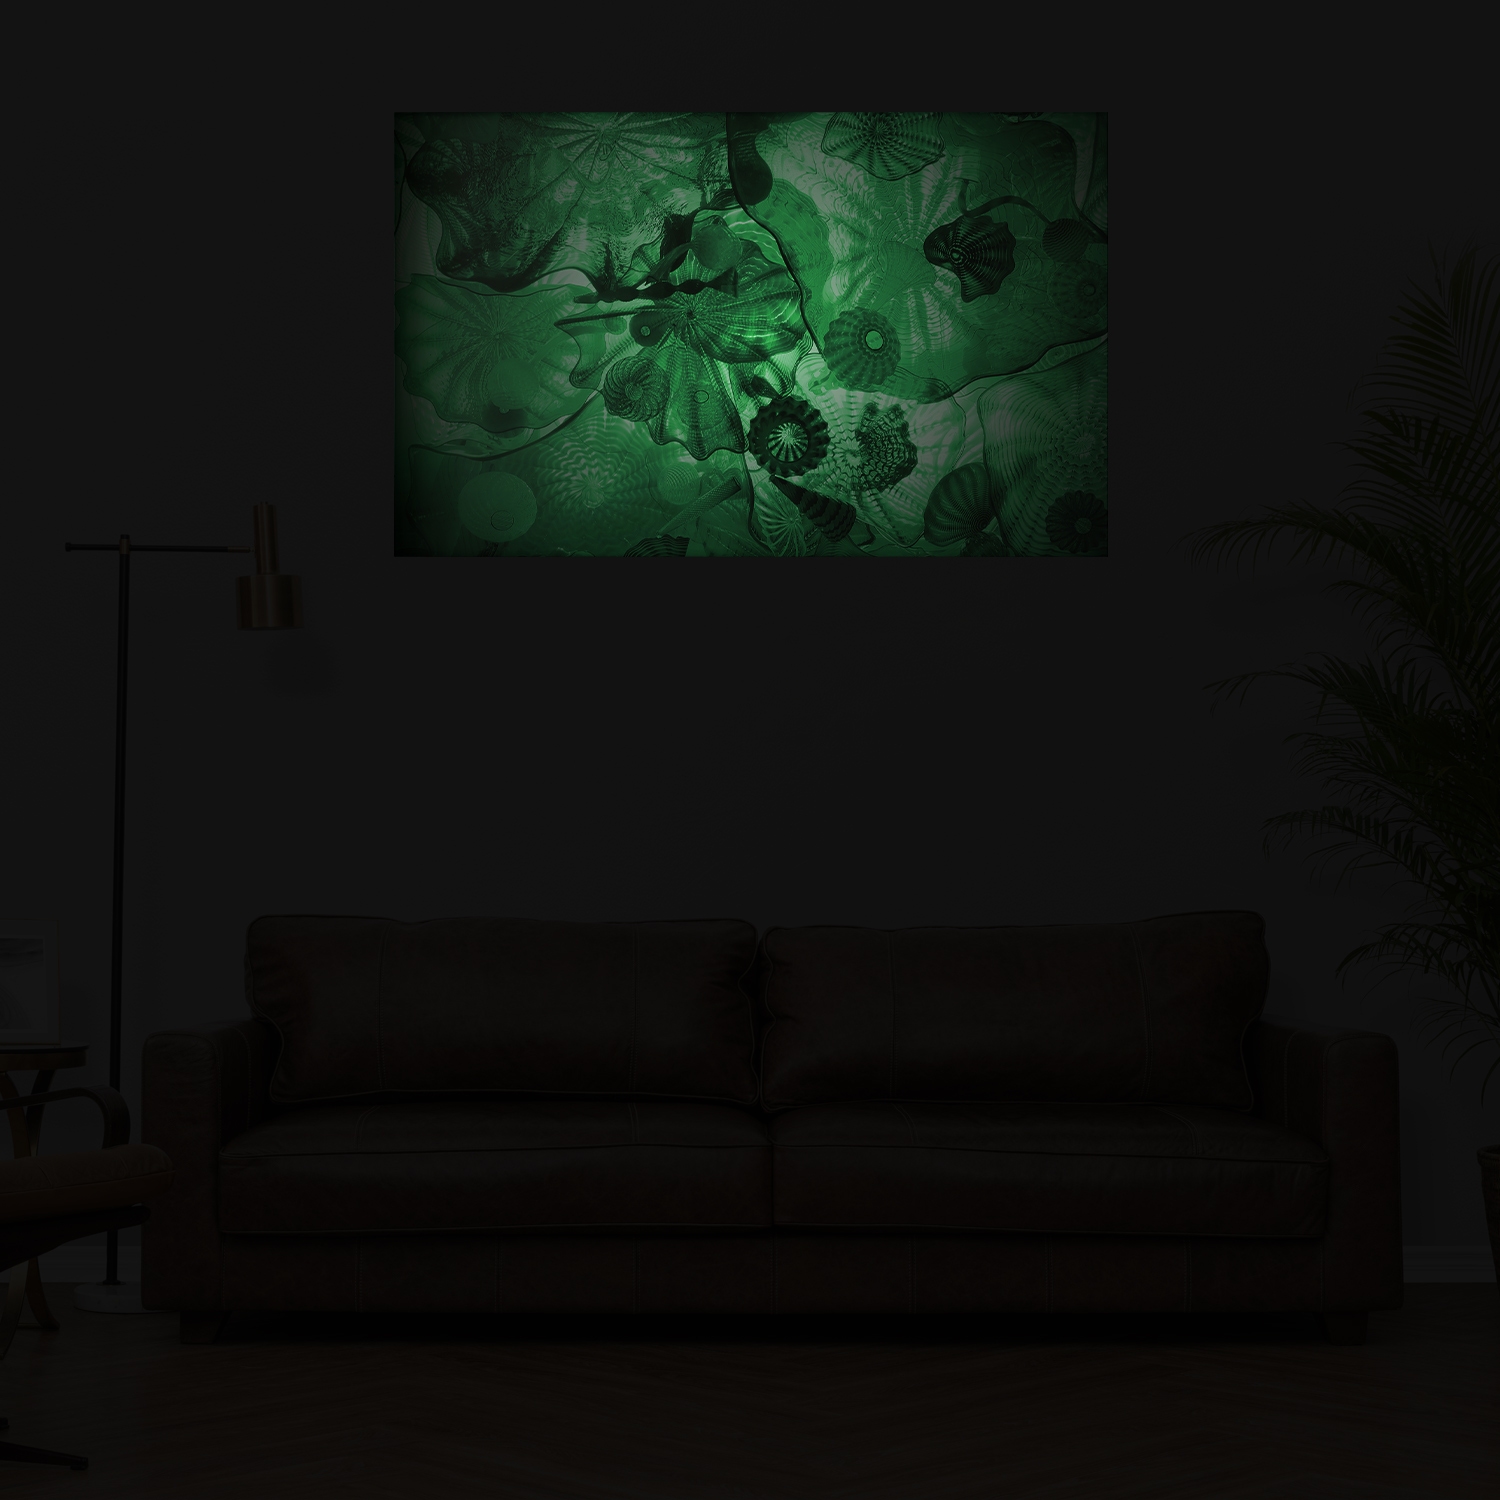 Tablou canvas luminos Meduze in culori, CLT0293, Picma, dualview, panza + sasiu lemn, 40 x 60 cm